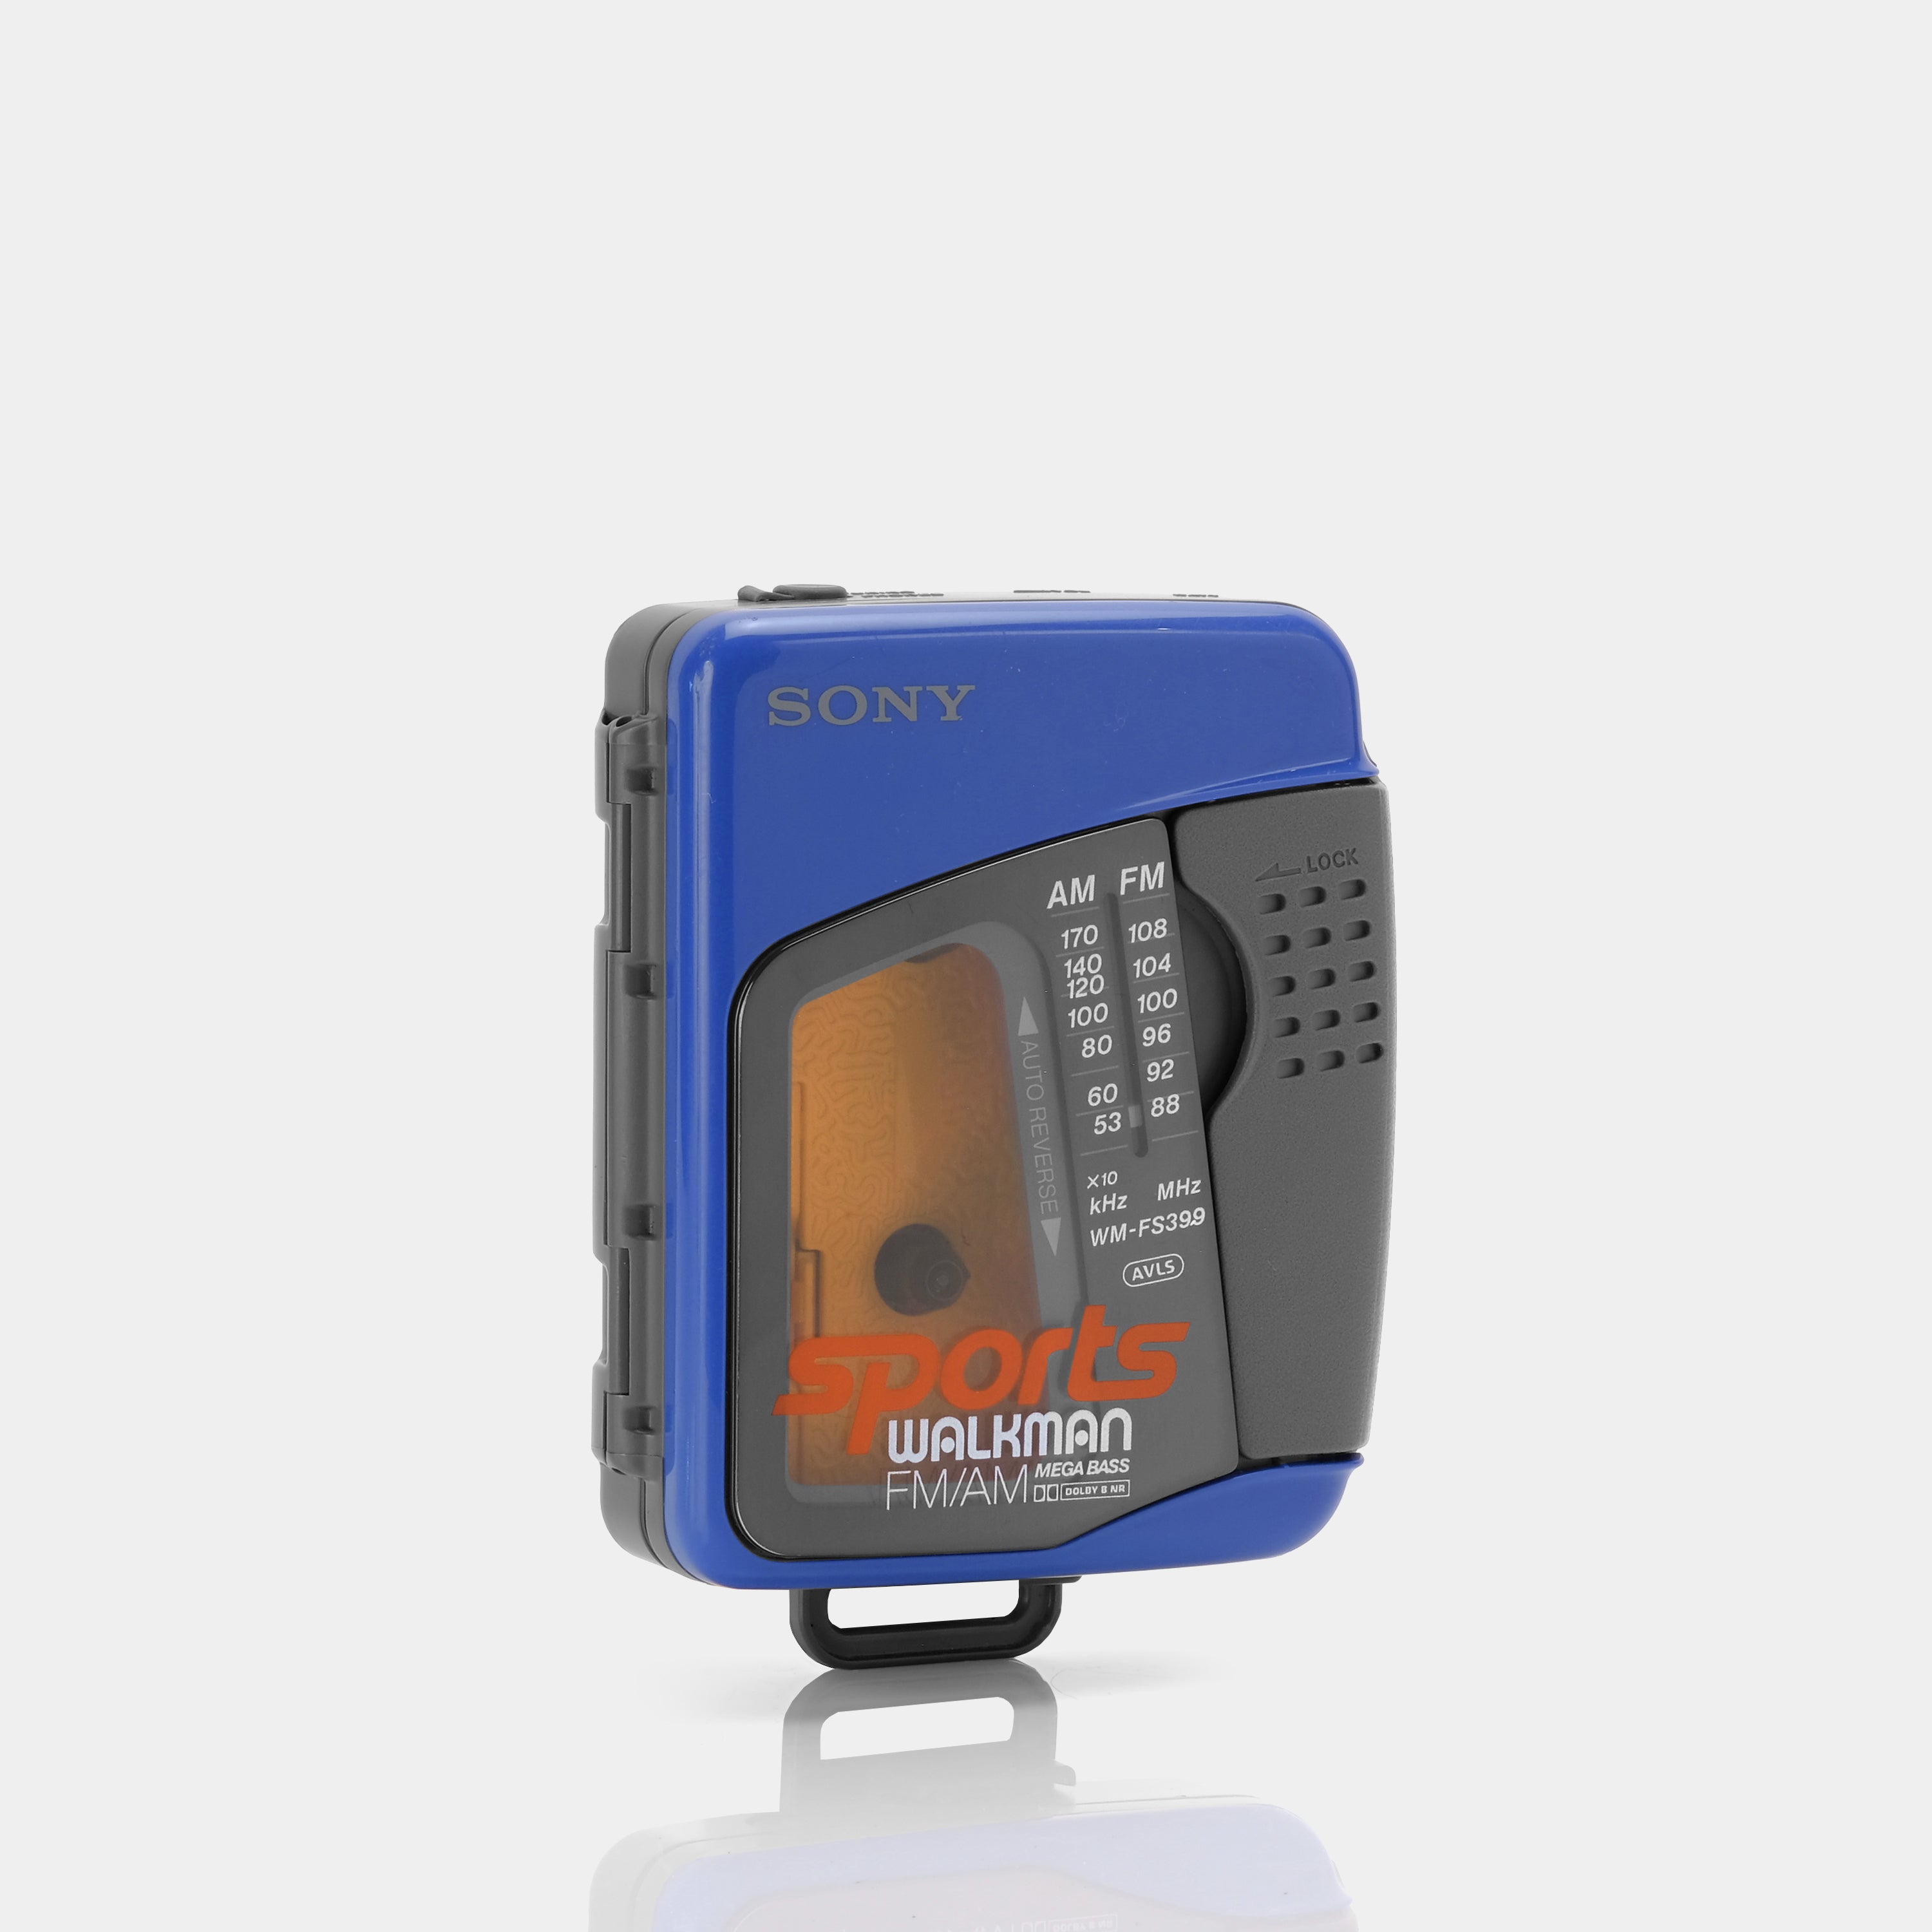 Sony Sports Walkman WM-FS399 AM/FM Portable Cassette Player